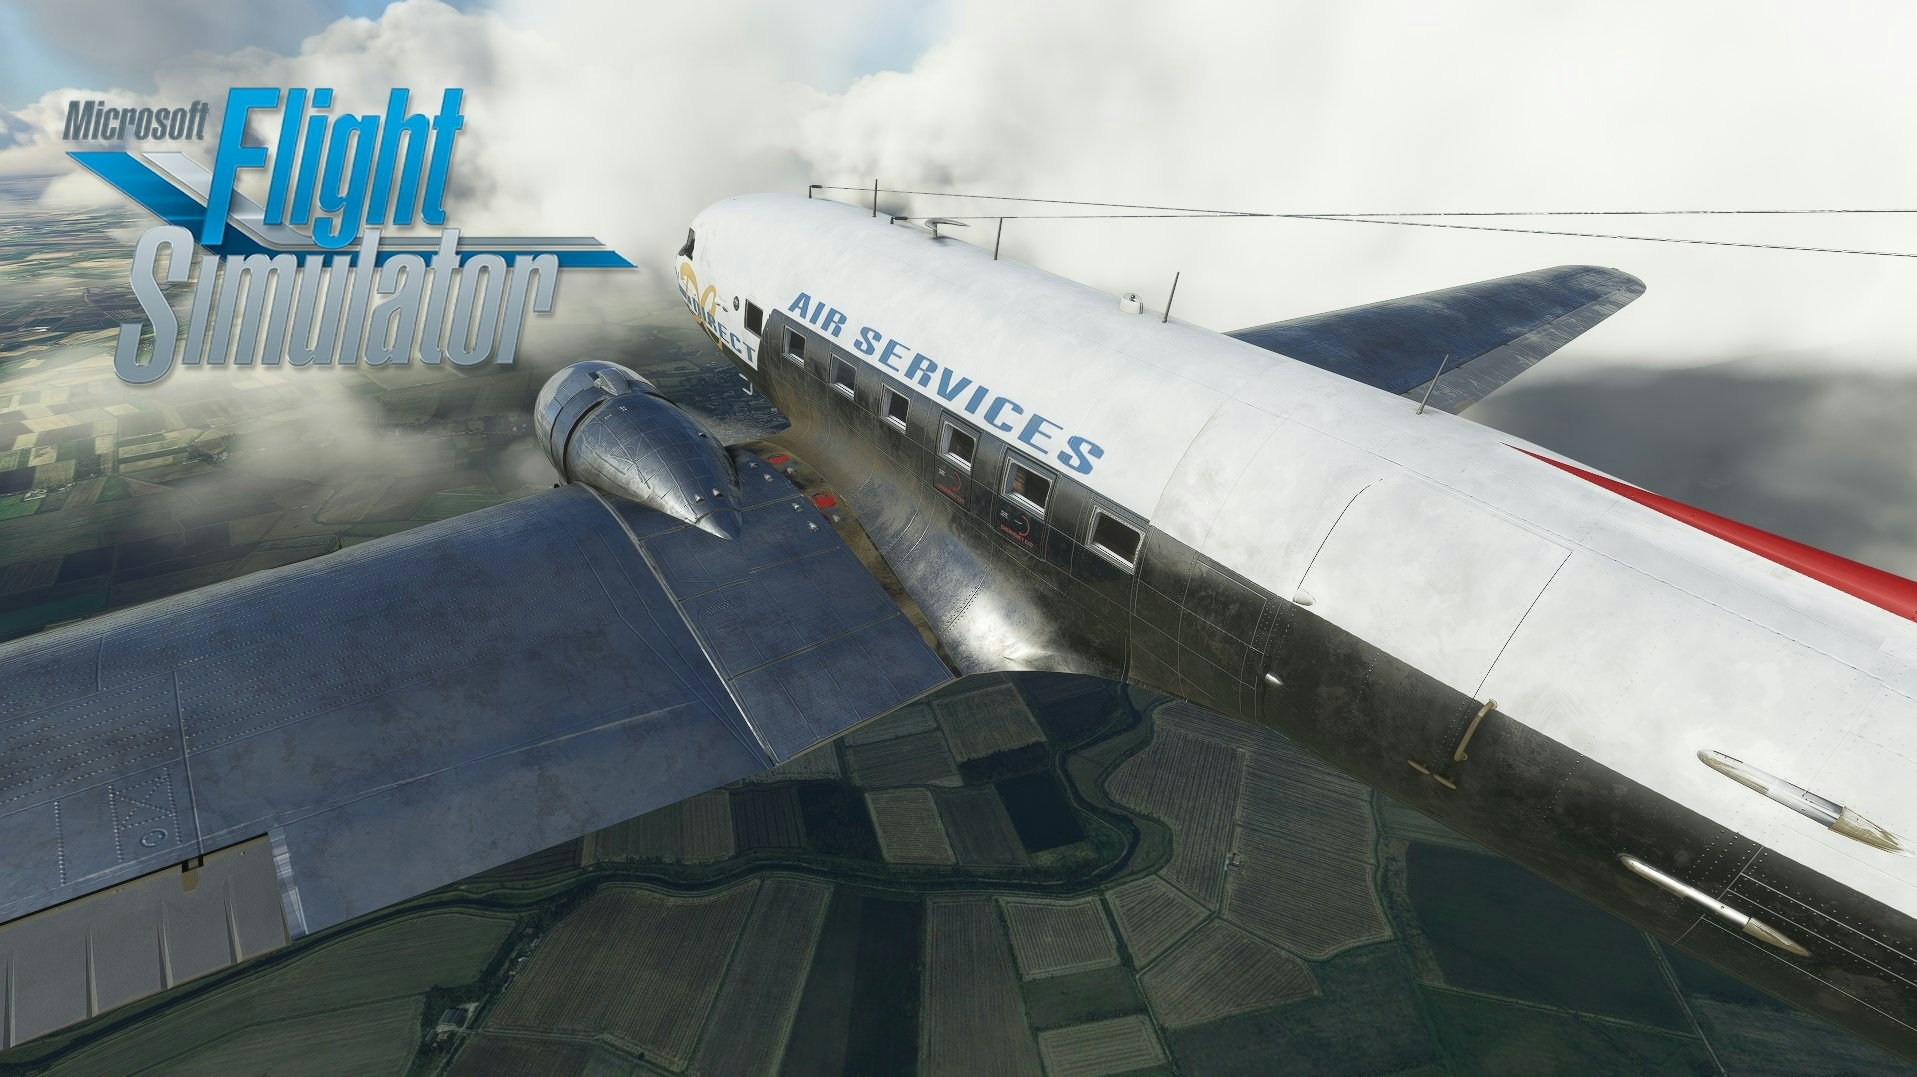 Aeroplane Heaven Microsoft Partnership, Chipmunk Announcement